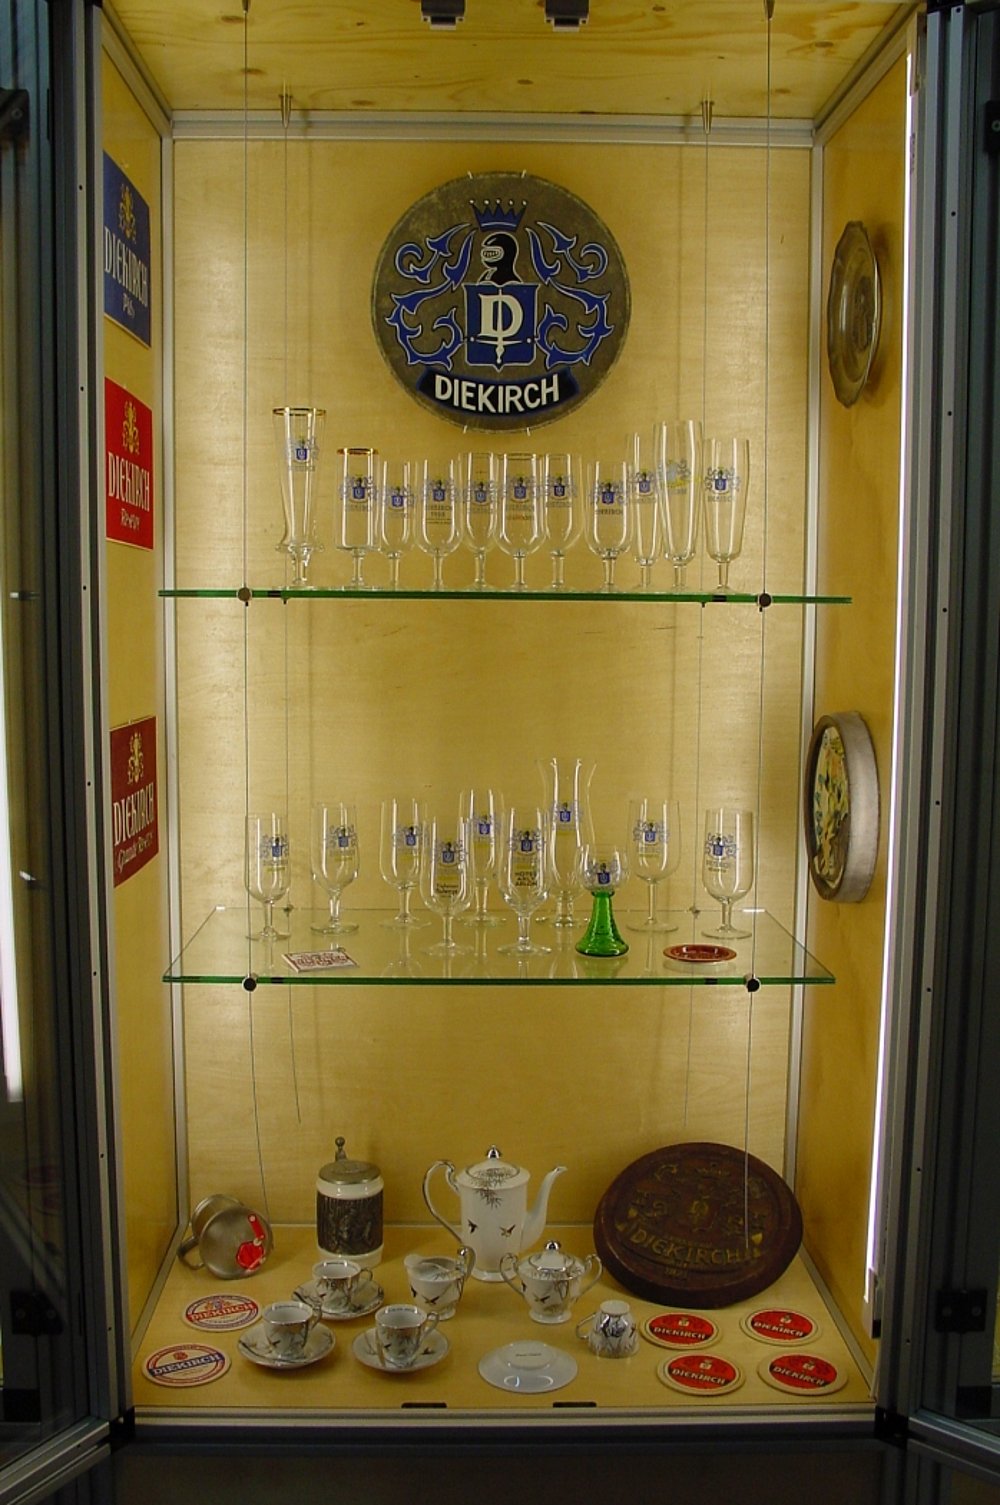 Beermuseum of the Diekirch brewery